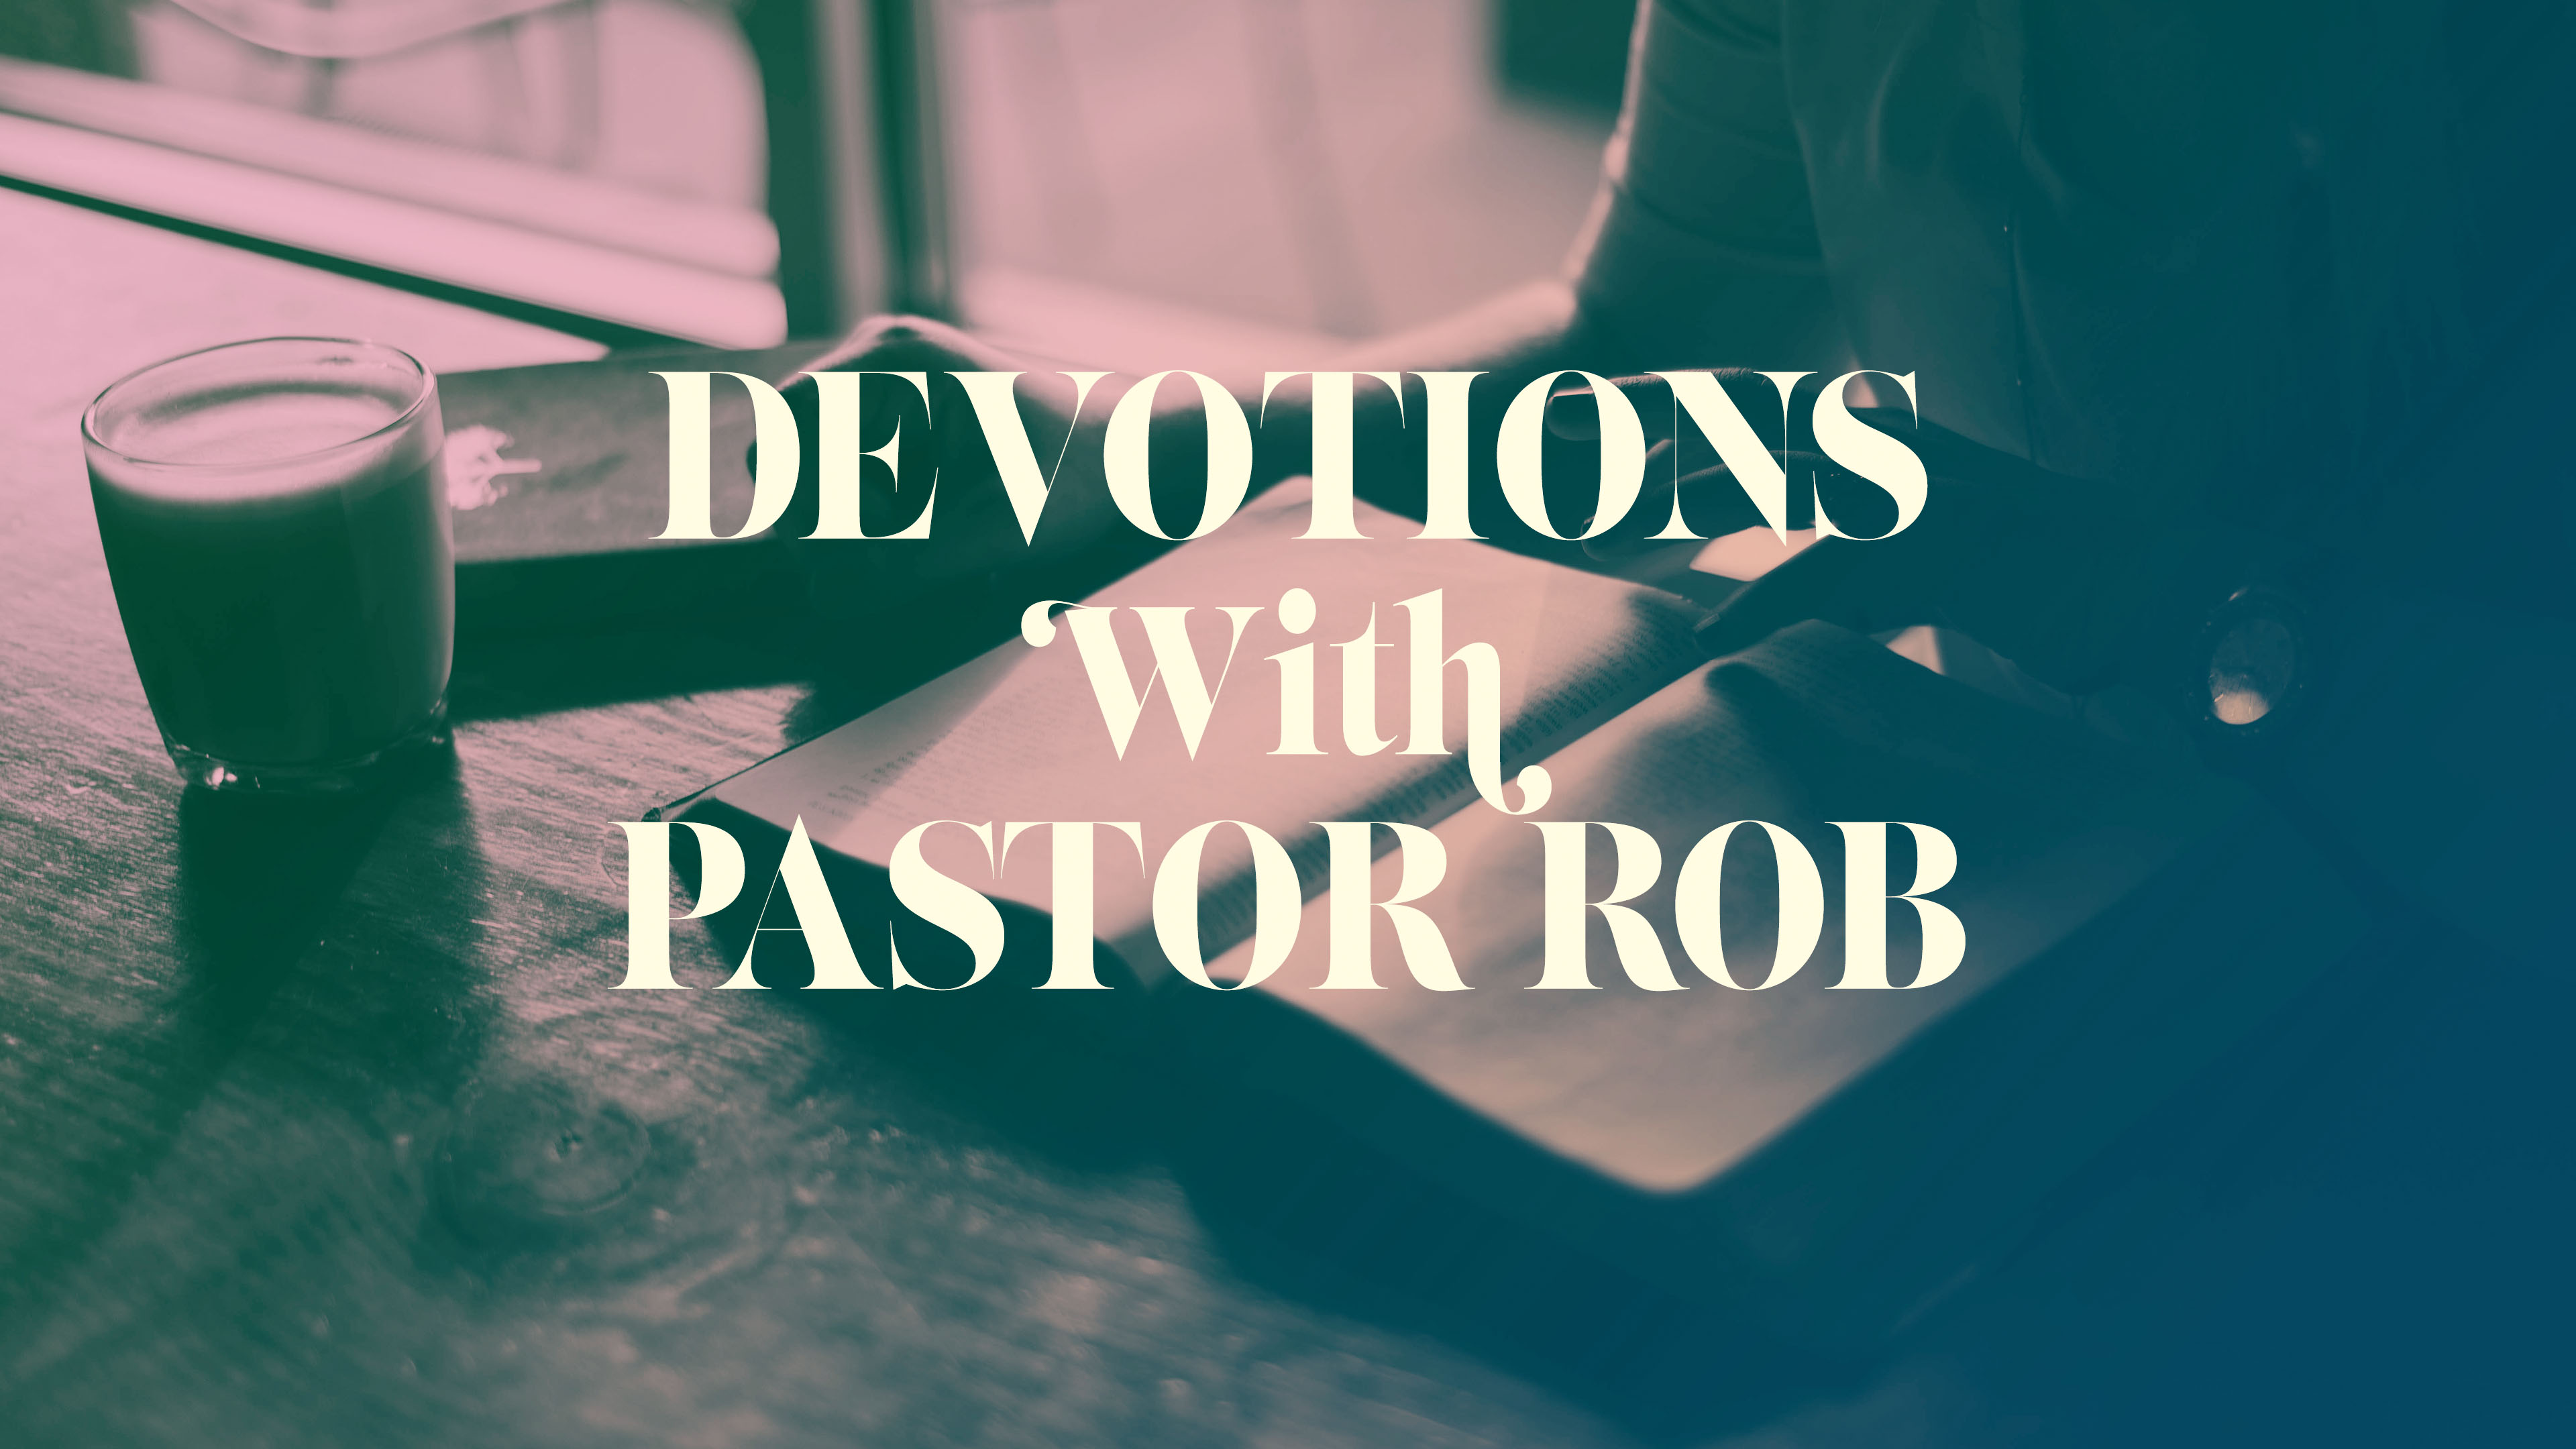 Pastor Rob